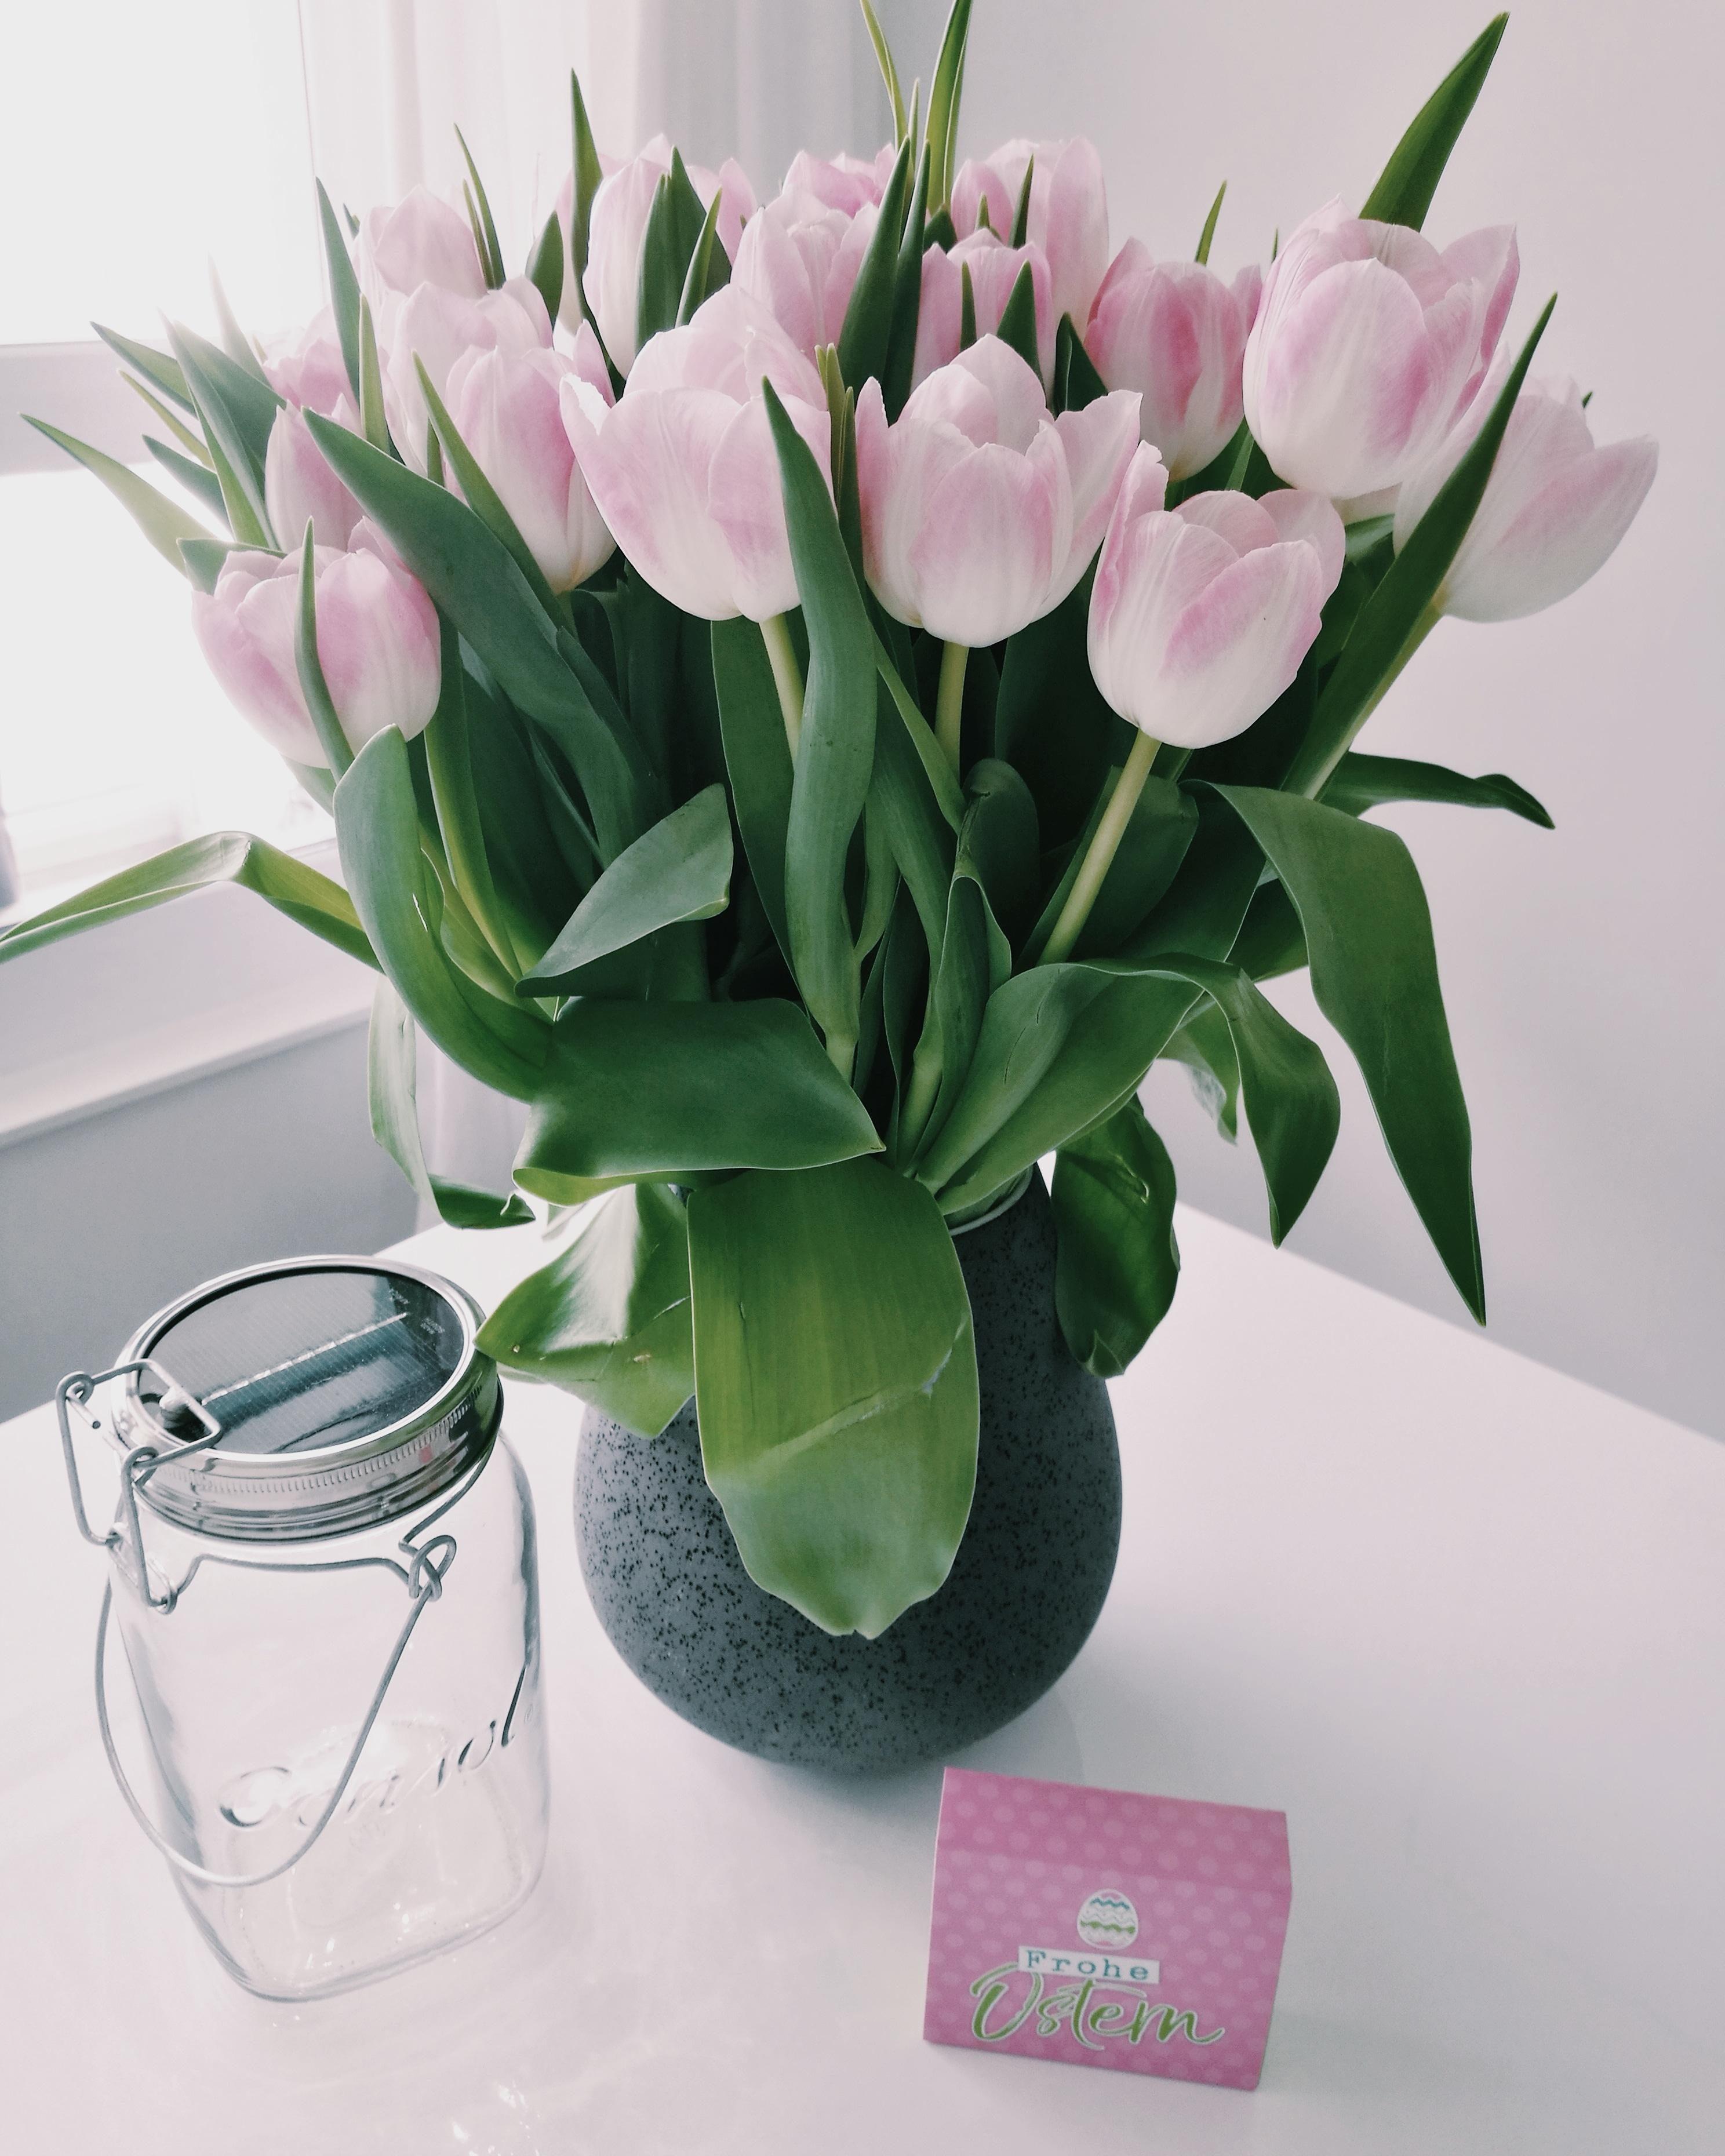 Happy easter weekend🐰🐇 #ostern #wochenende #interior #beautiful #tulips